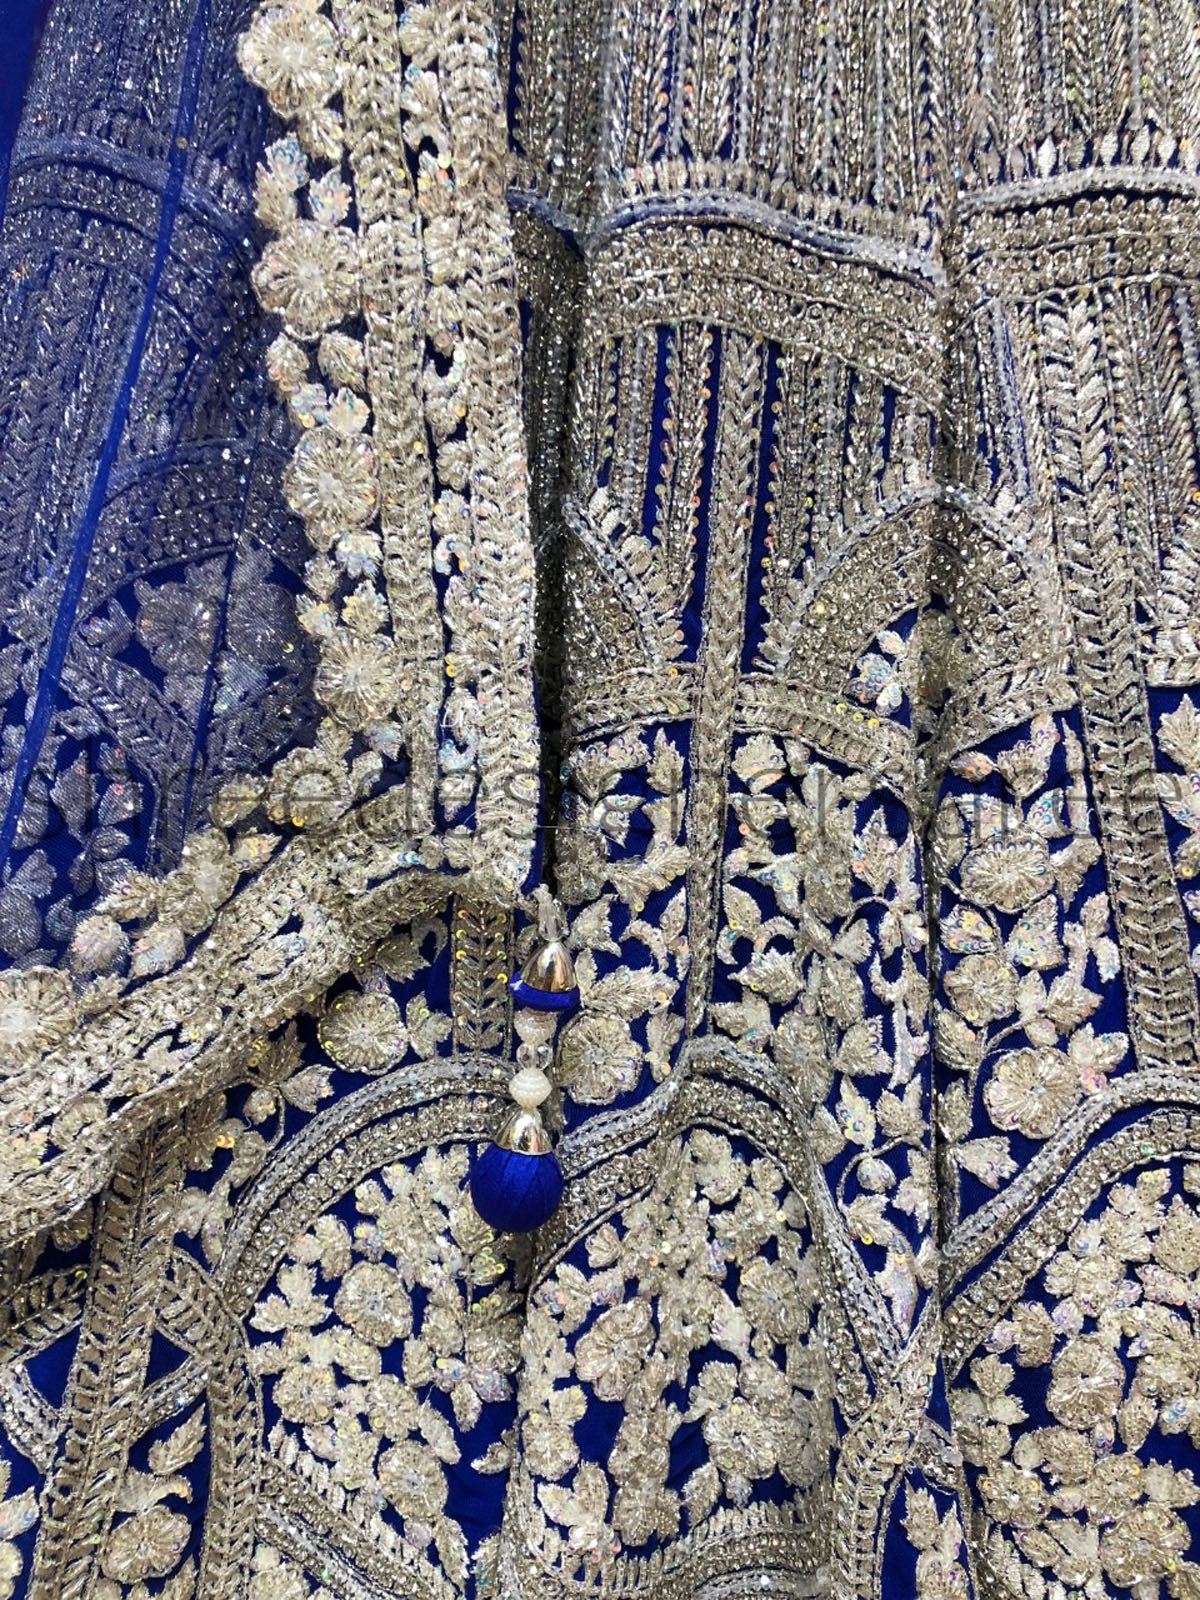 Buy Bollywood model Royal blue silk wedding lehenga choli in UK, USA and  Canada